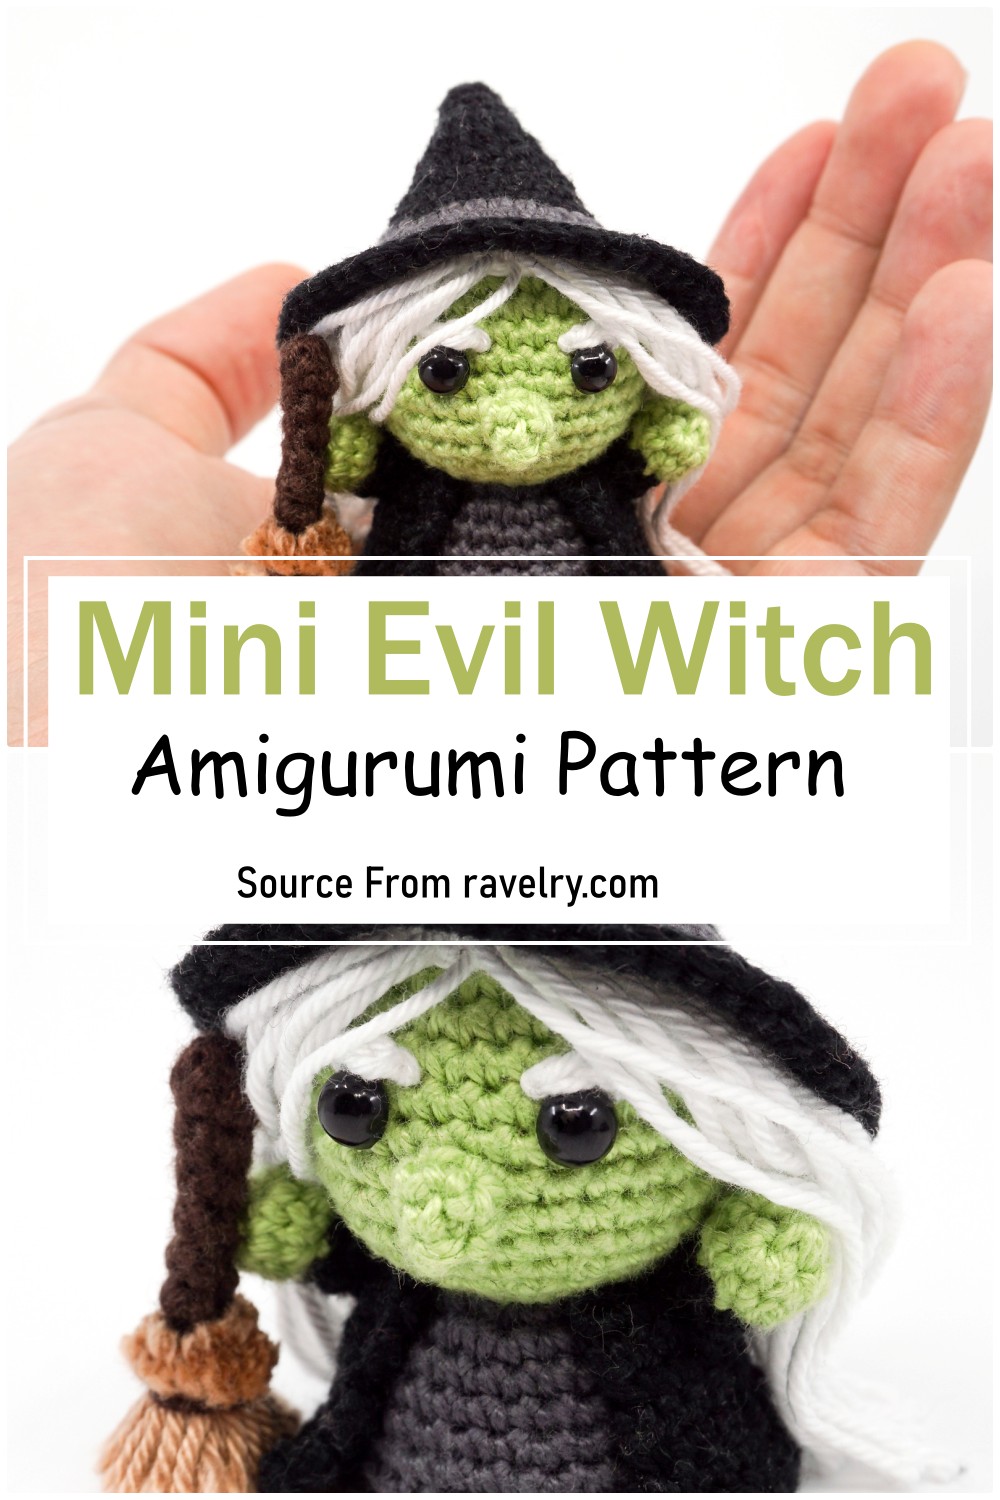 Mini Evil Witch Amigurumi